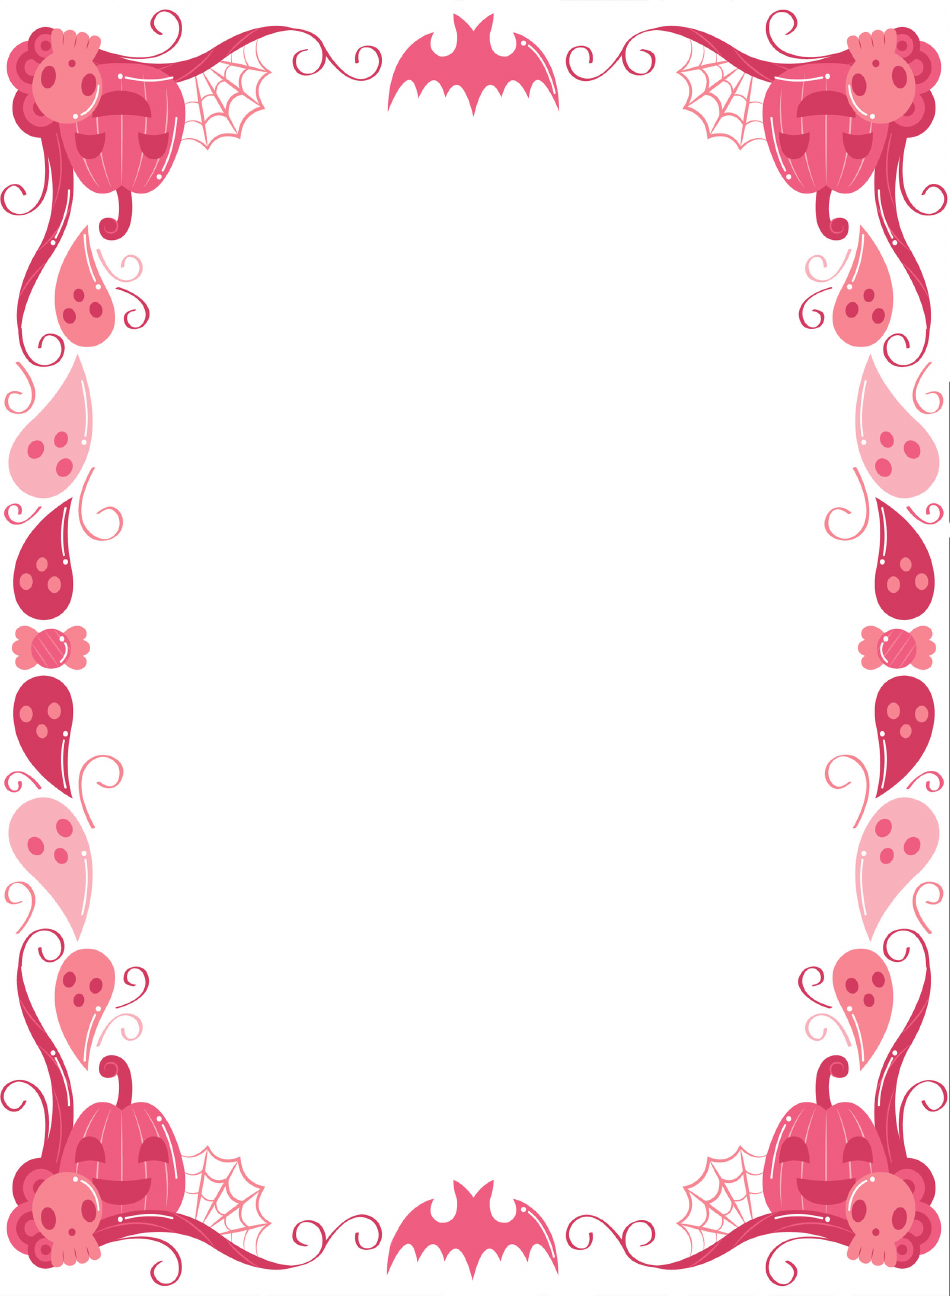 Document Template Pink Border Illustration